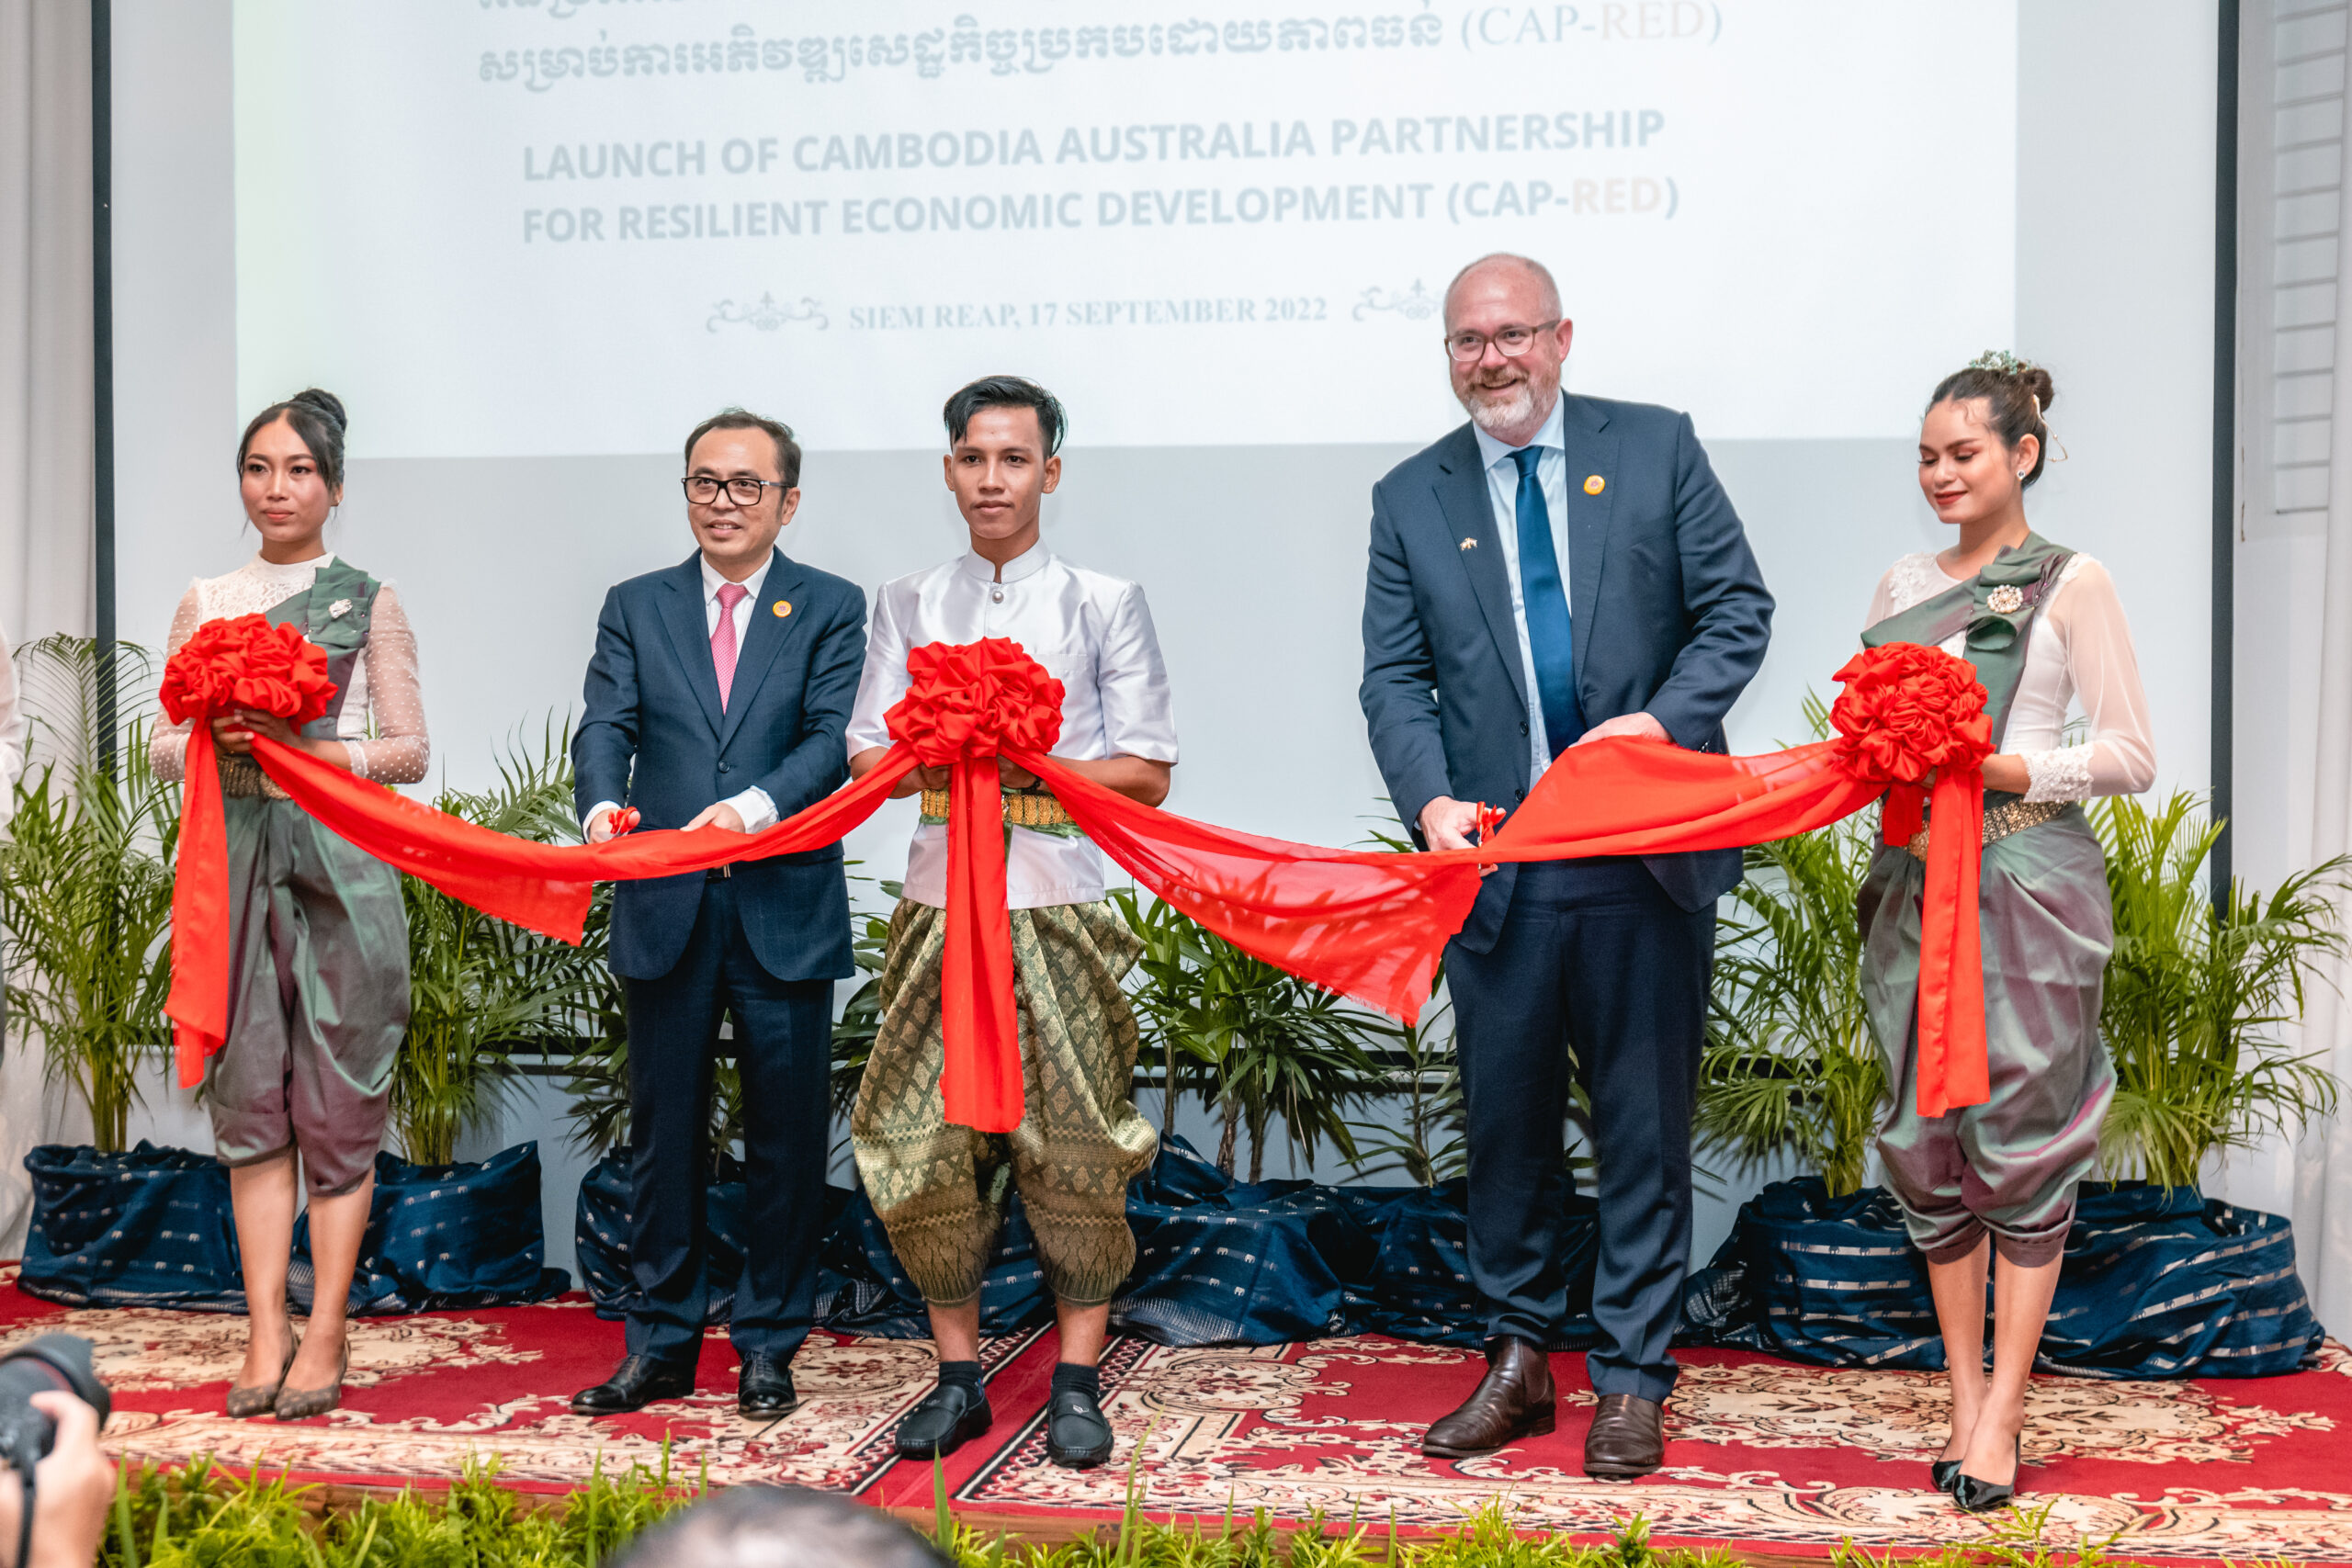 New Cambodia–Australia Partnership for Resilient Economic Development